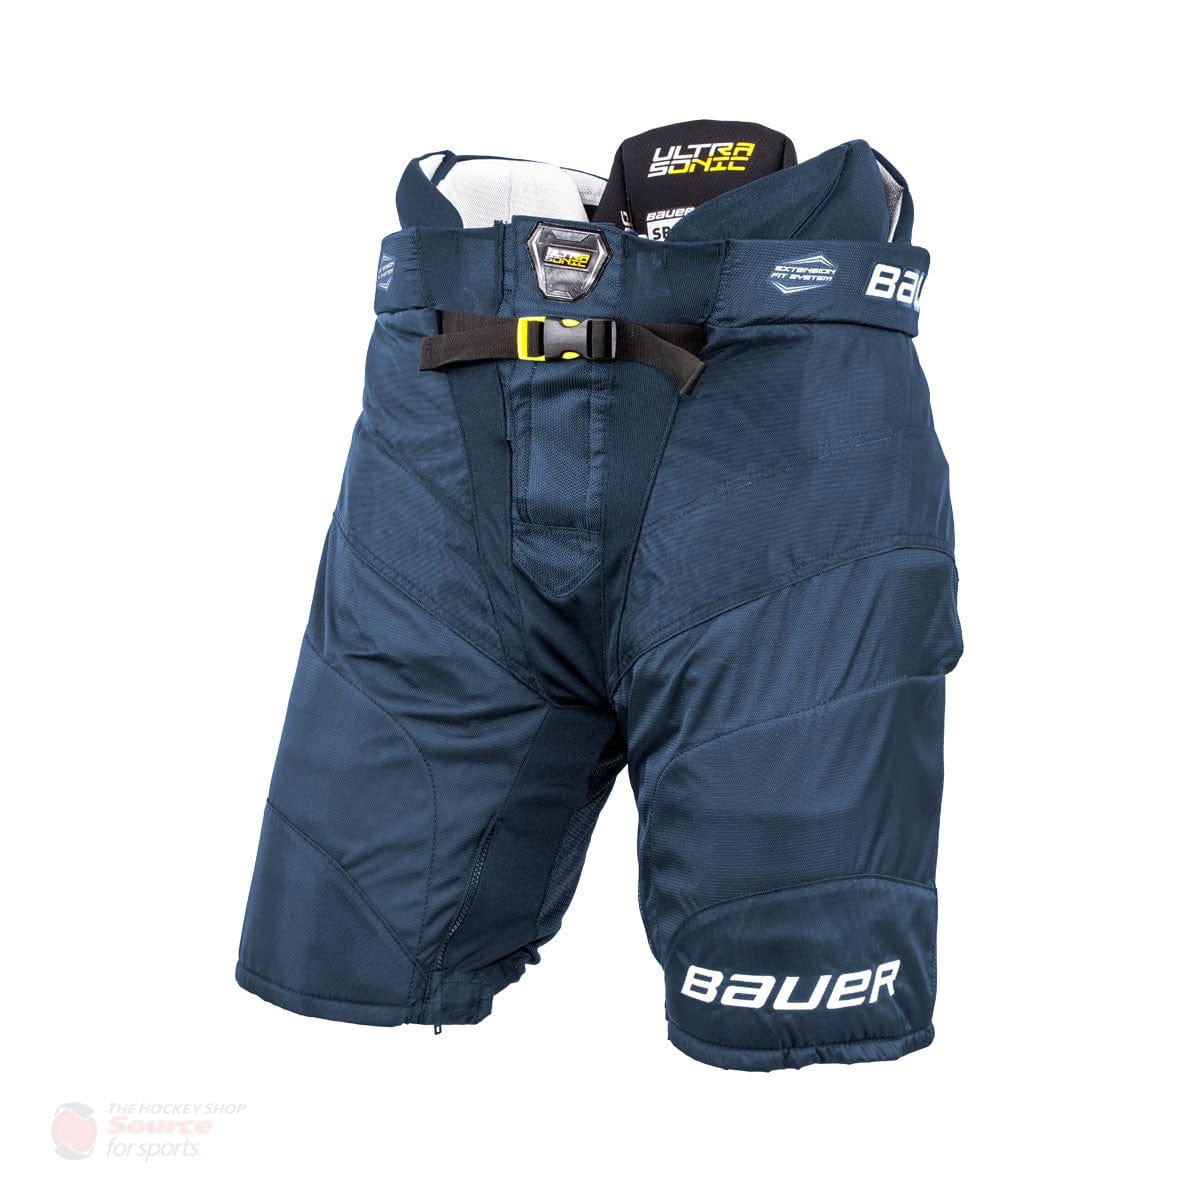 Bauer Supreme UltraSonic Intermediate Hockey Pants